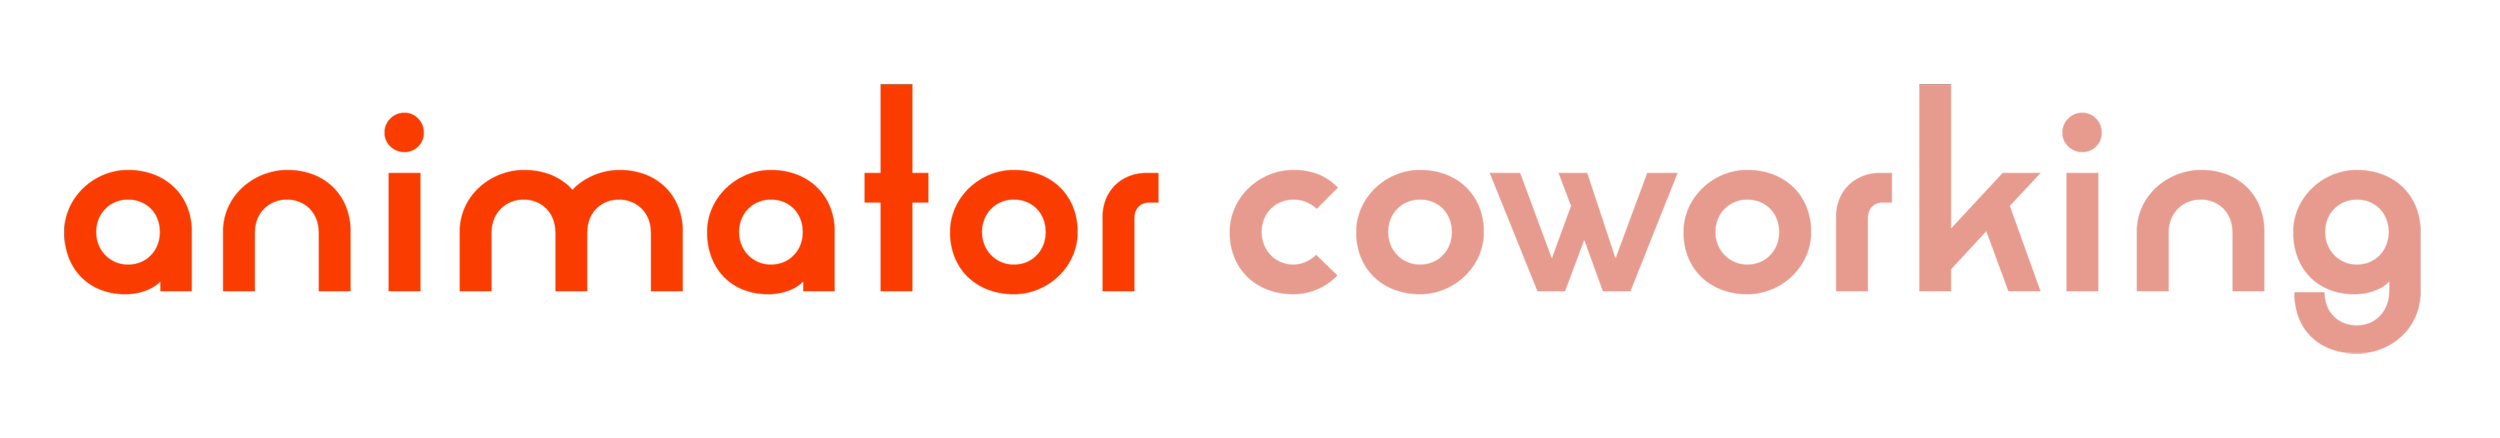 AC_logo_color.png